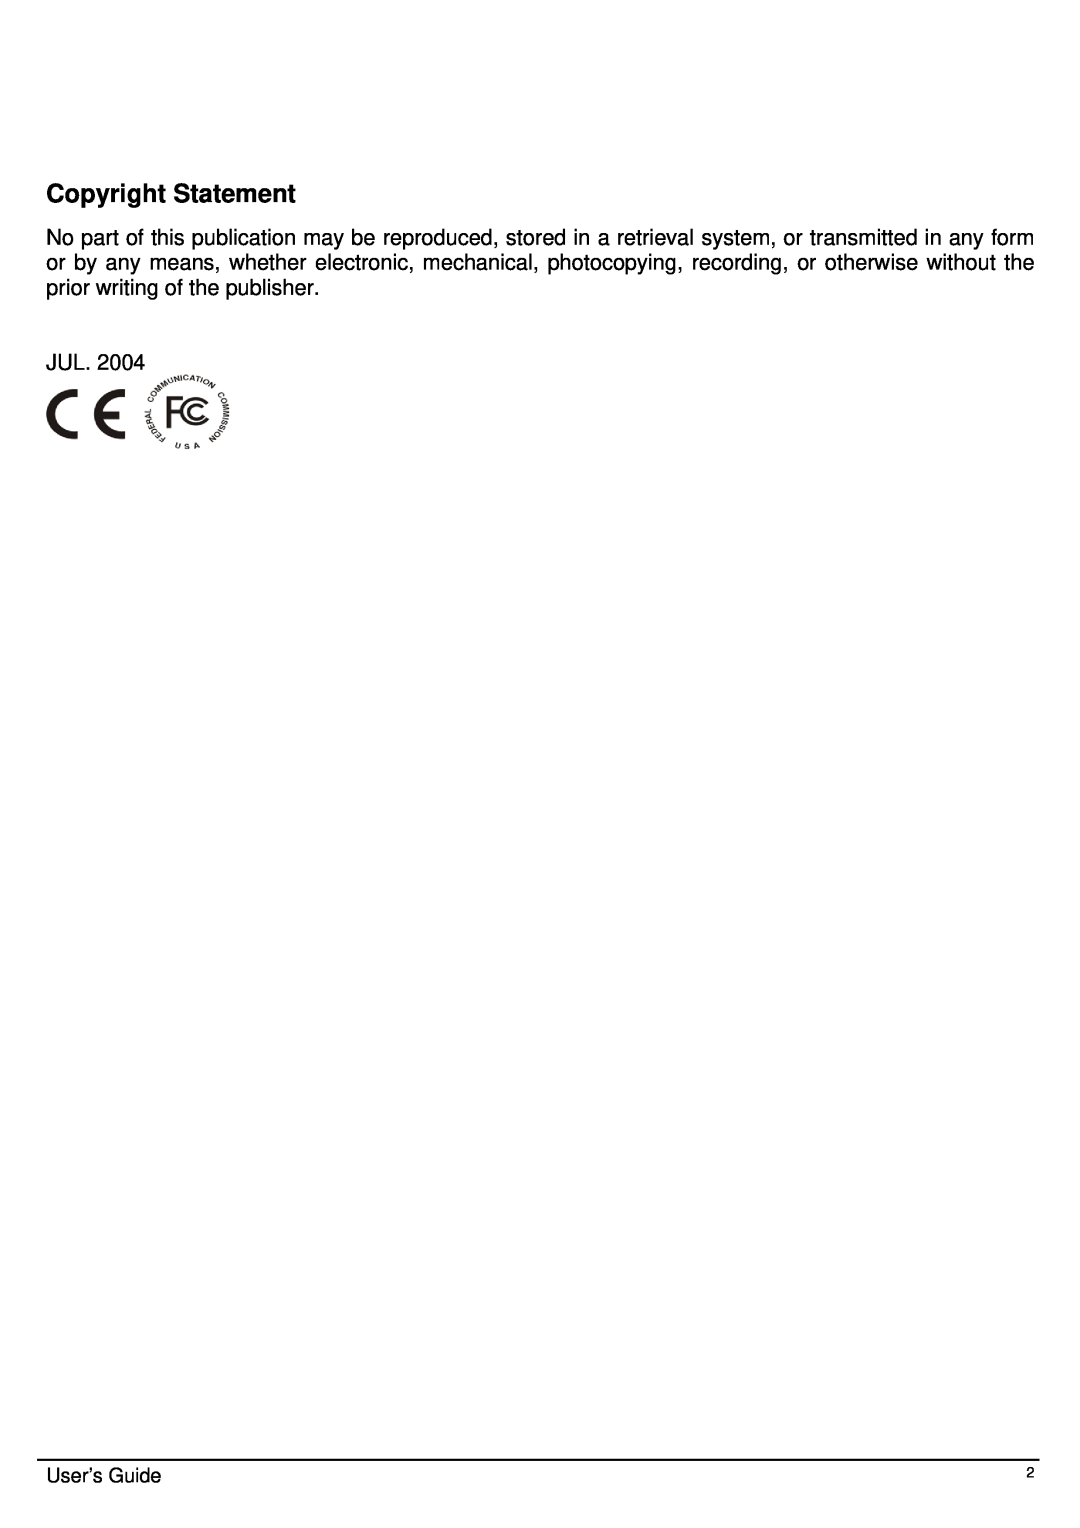 TRENDnet TEW-413APBO manual Copyright Statement, User’s Guide 